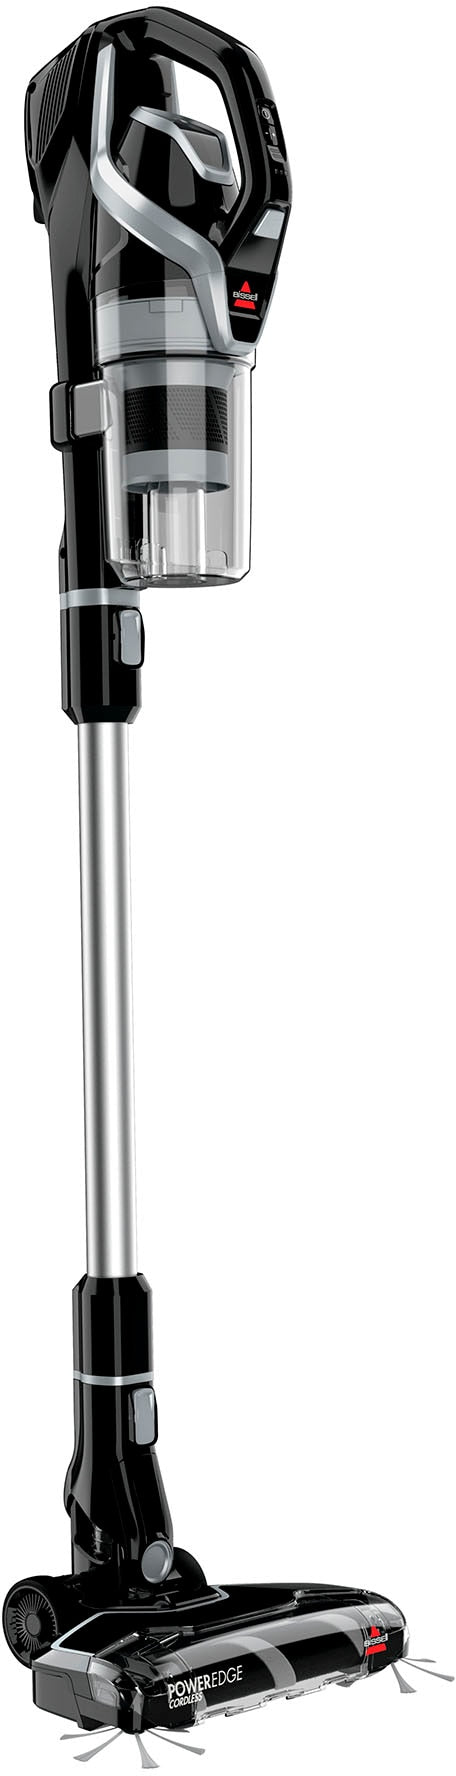 BISSELL - PowerEdge Cordless Stick Vacuum - Black_1